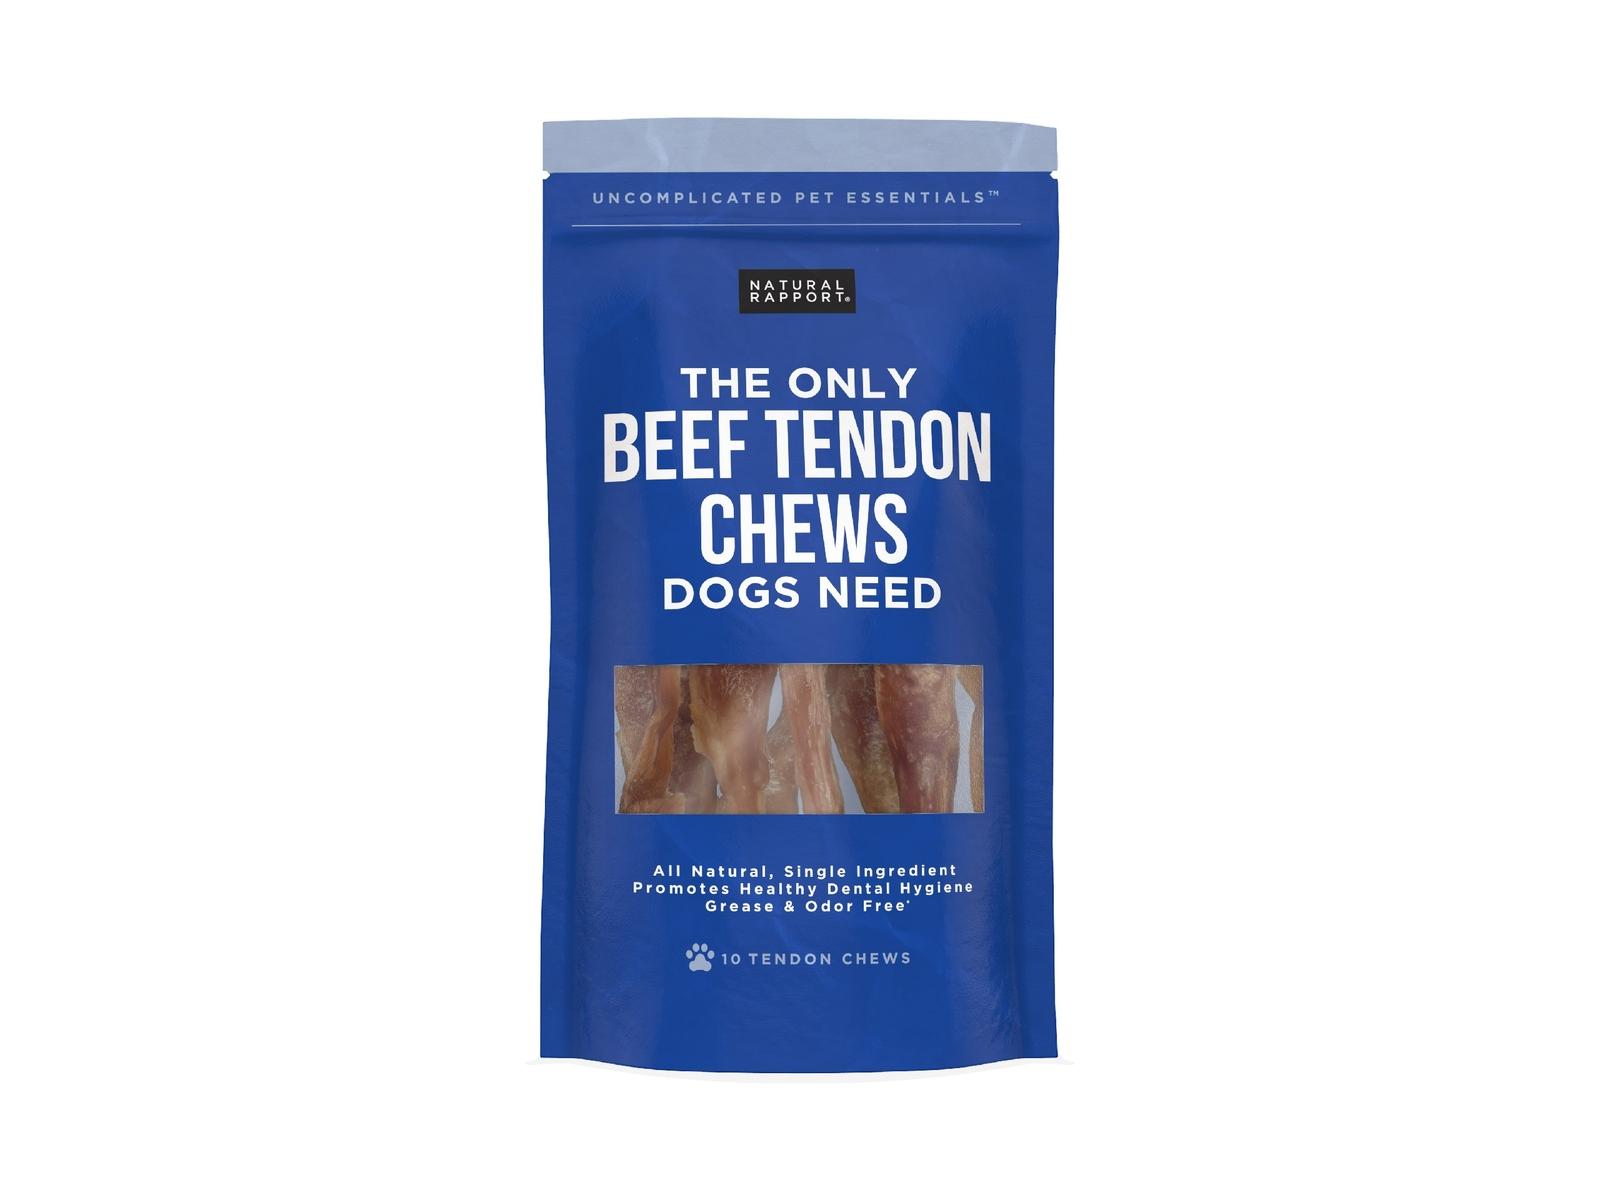 Beef Tendon Chews